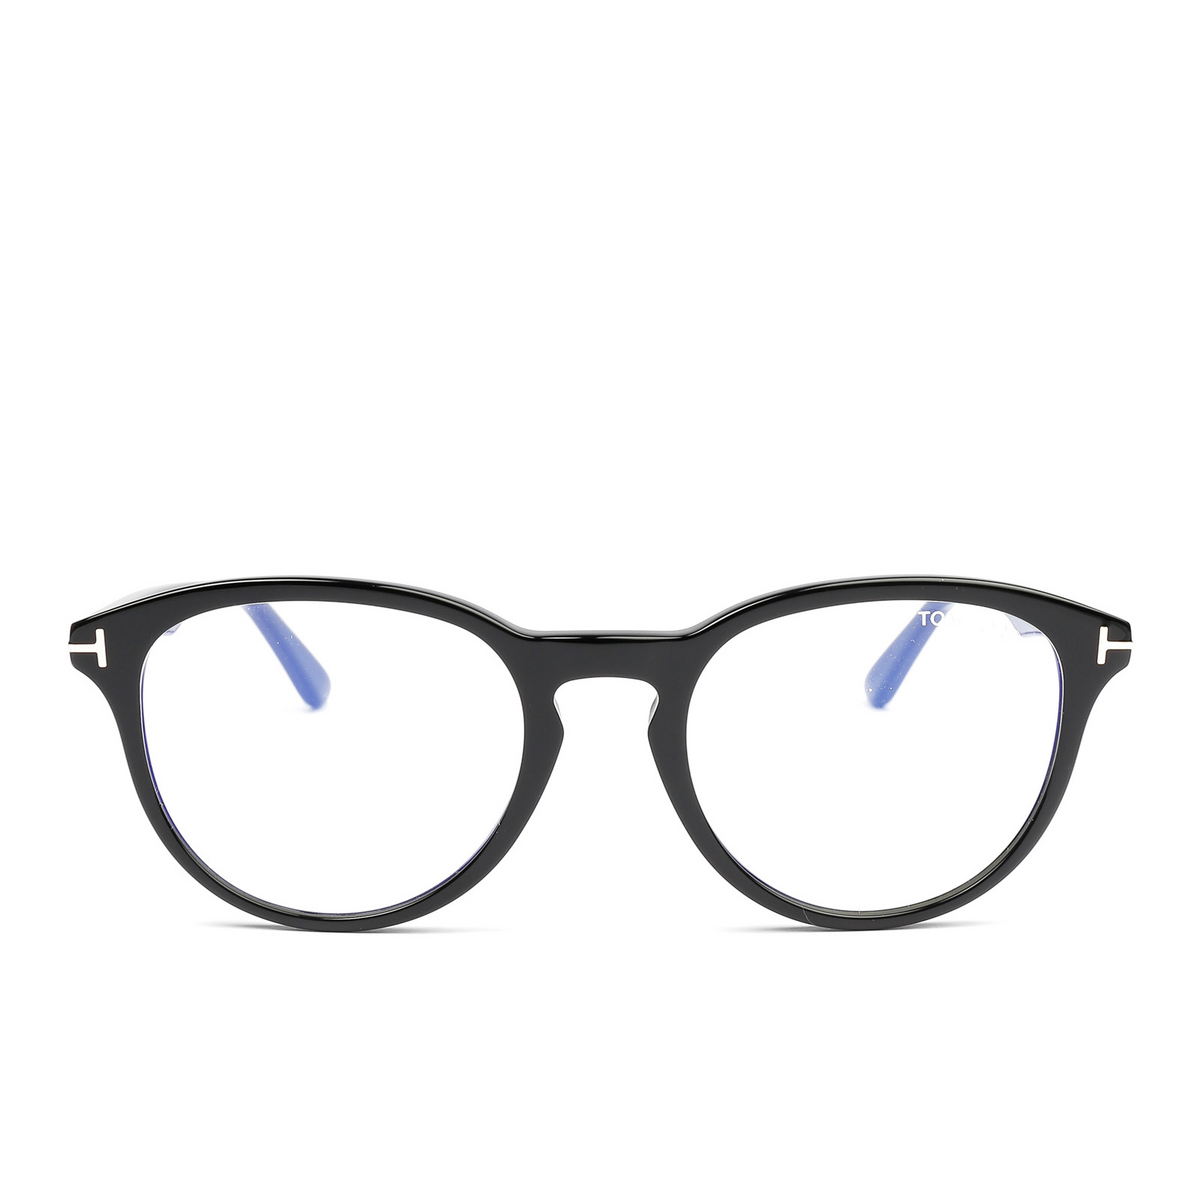 Tom Ford FT5556-B Eyeglasses 001 - front view